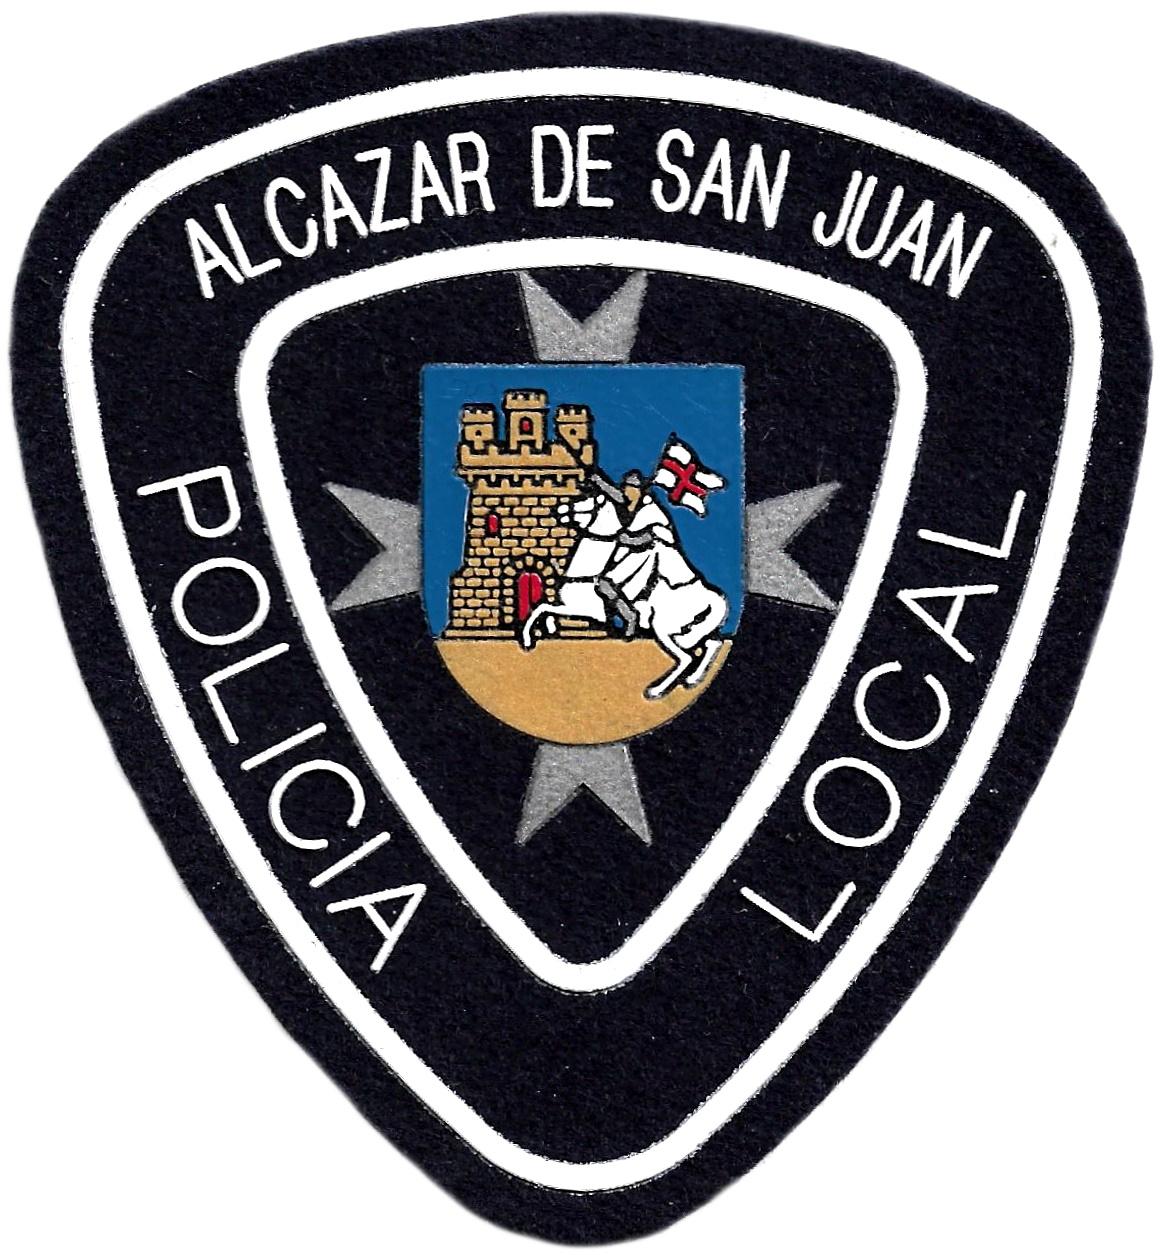 POLICÍA LOCAL ALCAZAR DE SAN JUAN PARCHE INSIGNIA EMBLEMA